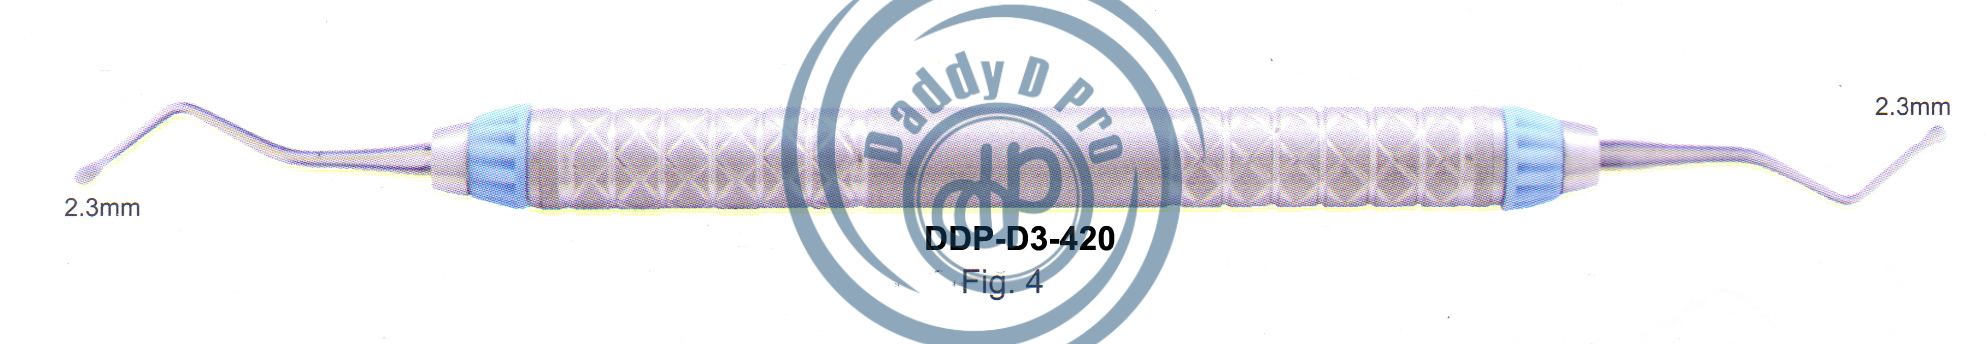 images/DDP-D3-420.png